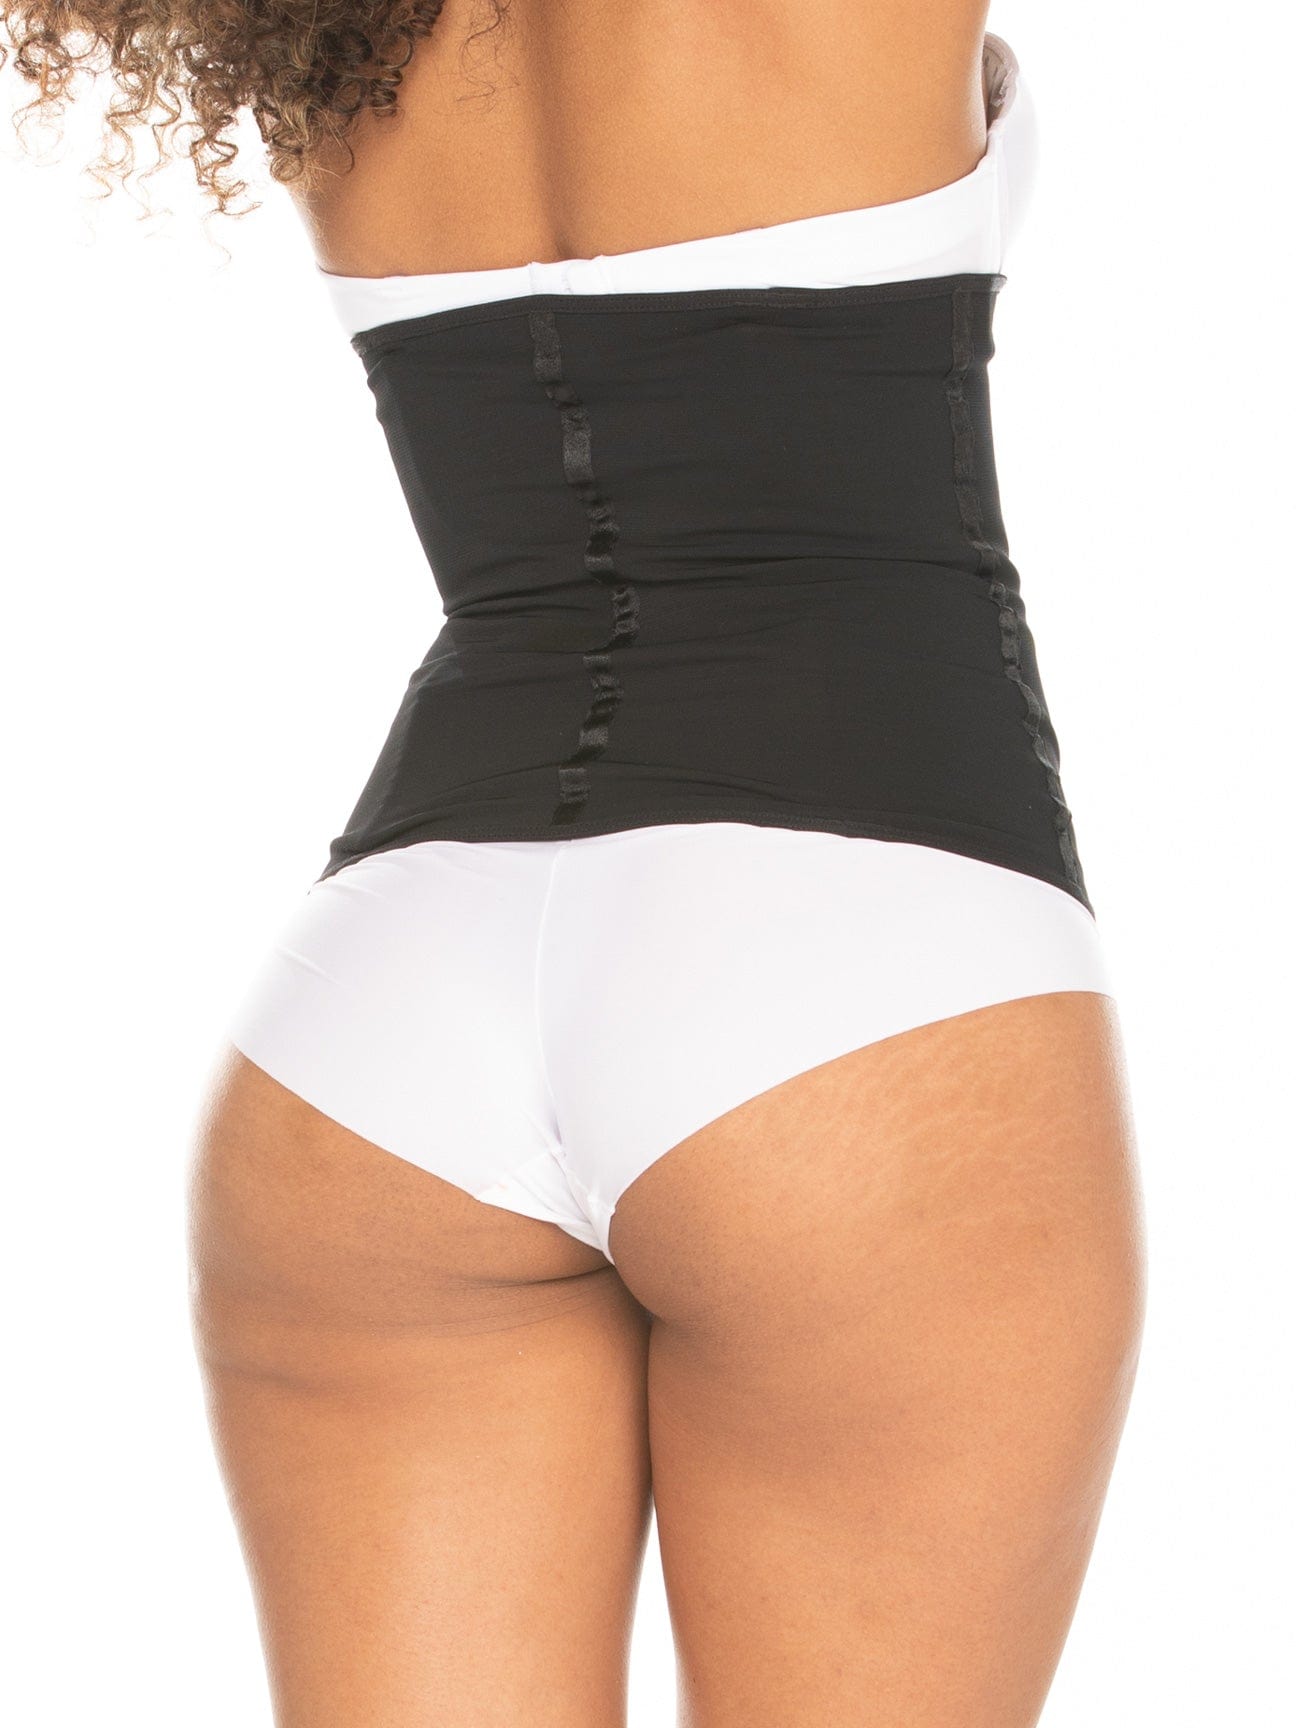 Model is wearing a strapless faja custom size xs waist/ 3xl hips ⌛️❤️‍